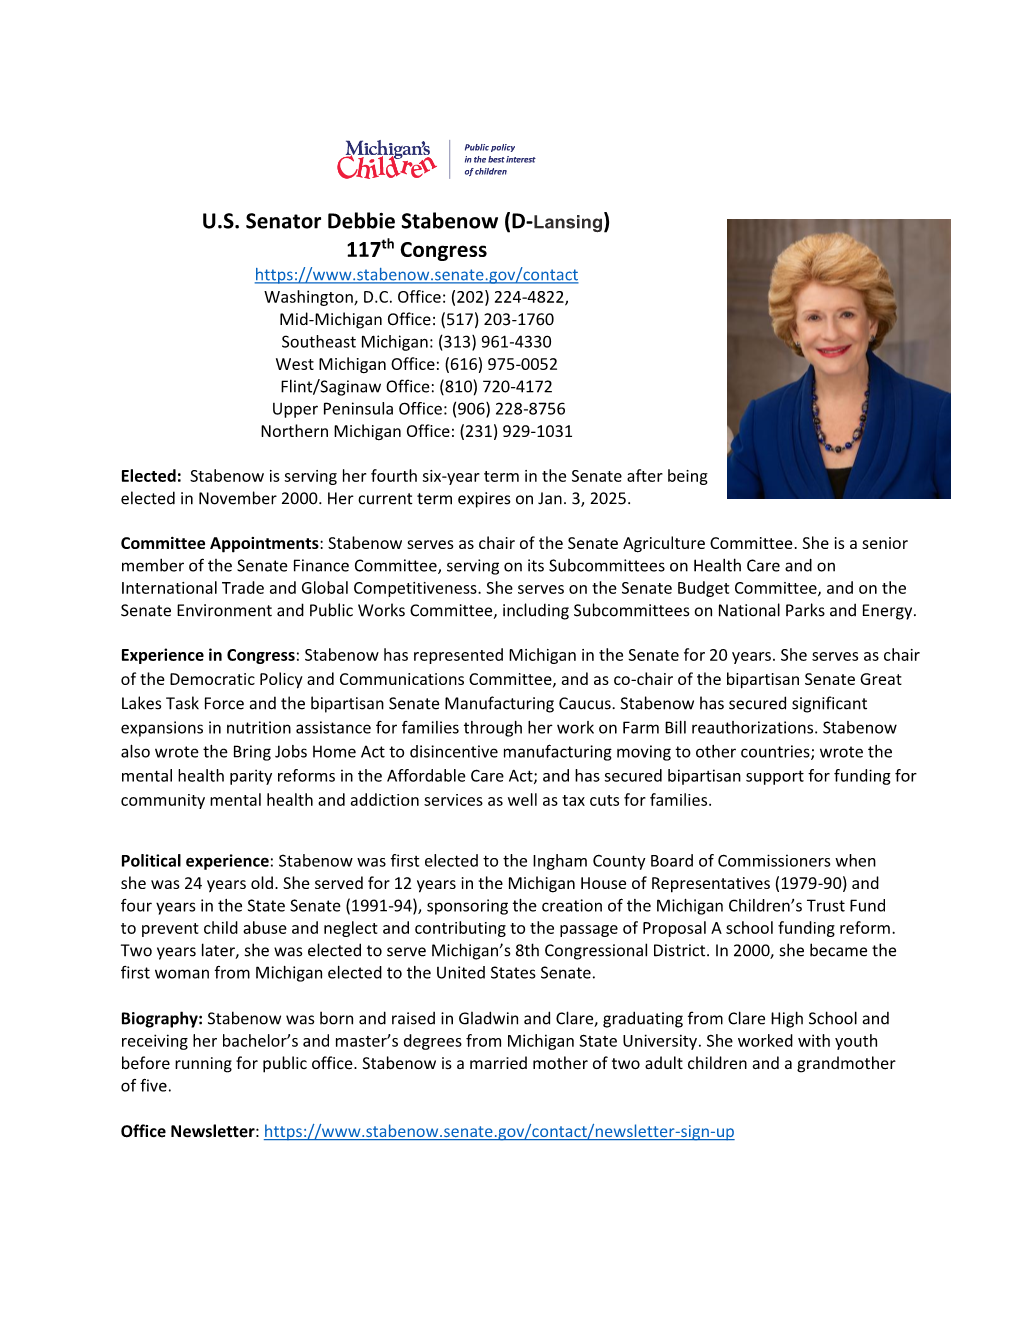 U.S. Senator Debbie Stabenow (D-Lansing) 117Th Congress Washington, D.C